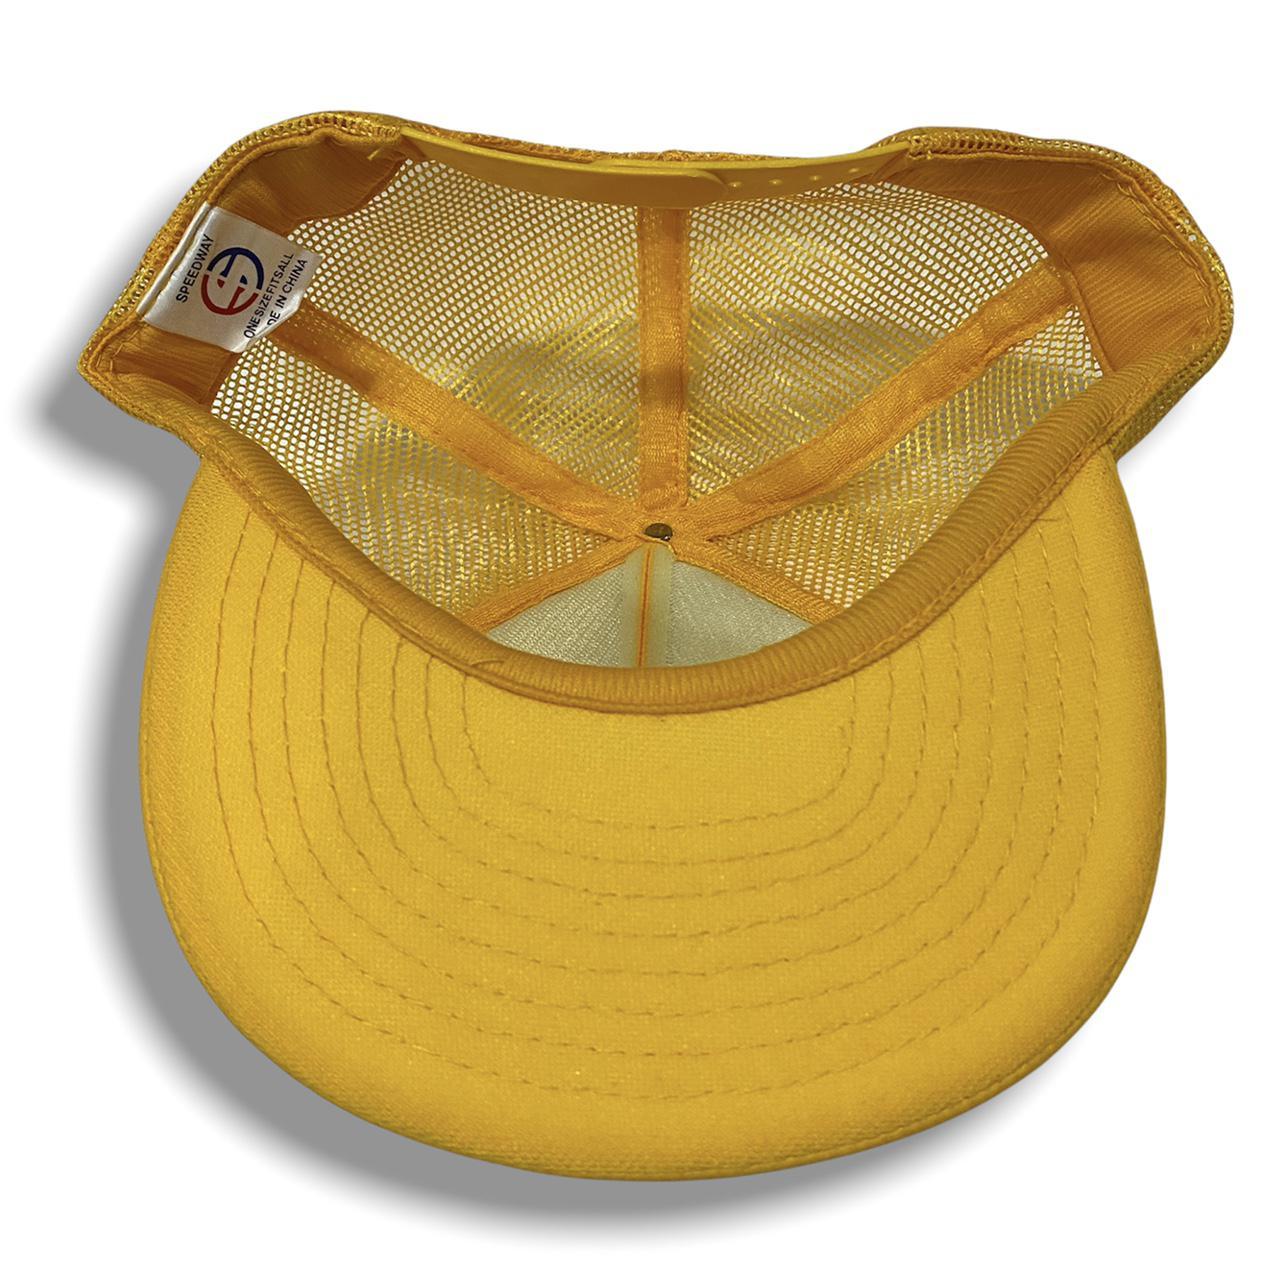 Vintage - STREN Fishing Line - Adjustable Snapback HAT Cap